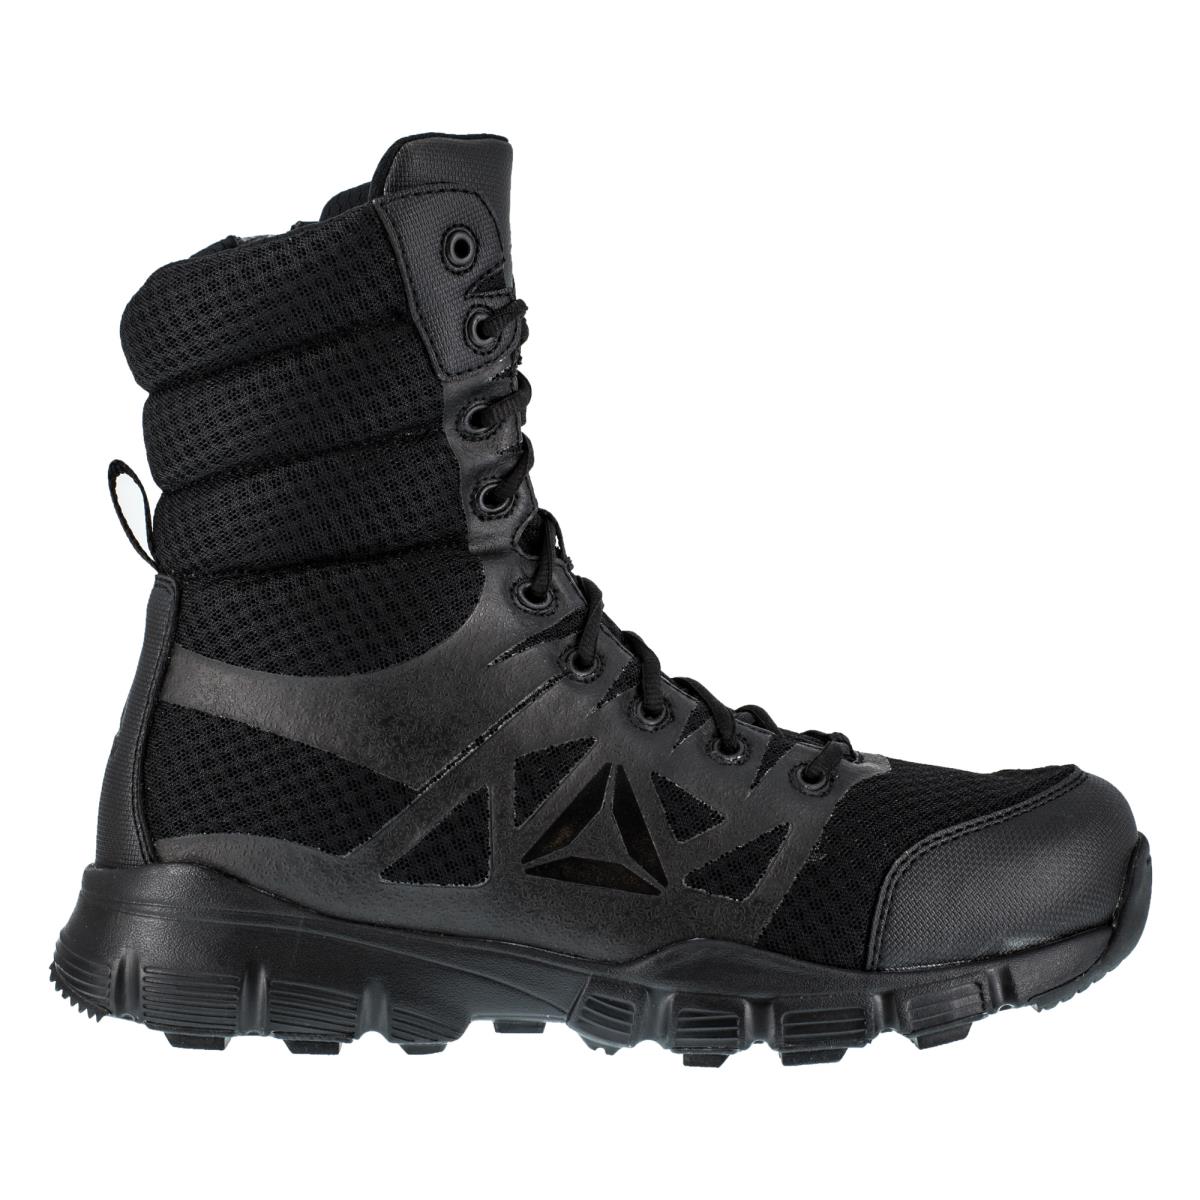 Reebok Mens Black Mesh Work Boots Dauntless Zip Hiker 8 M